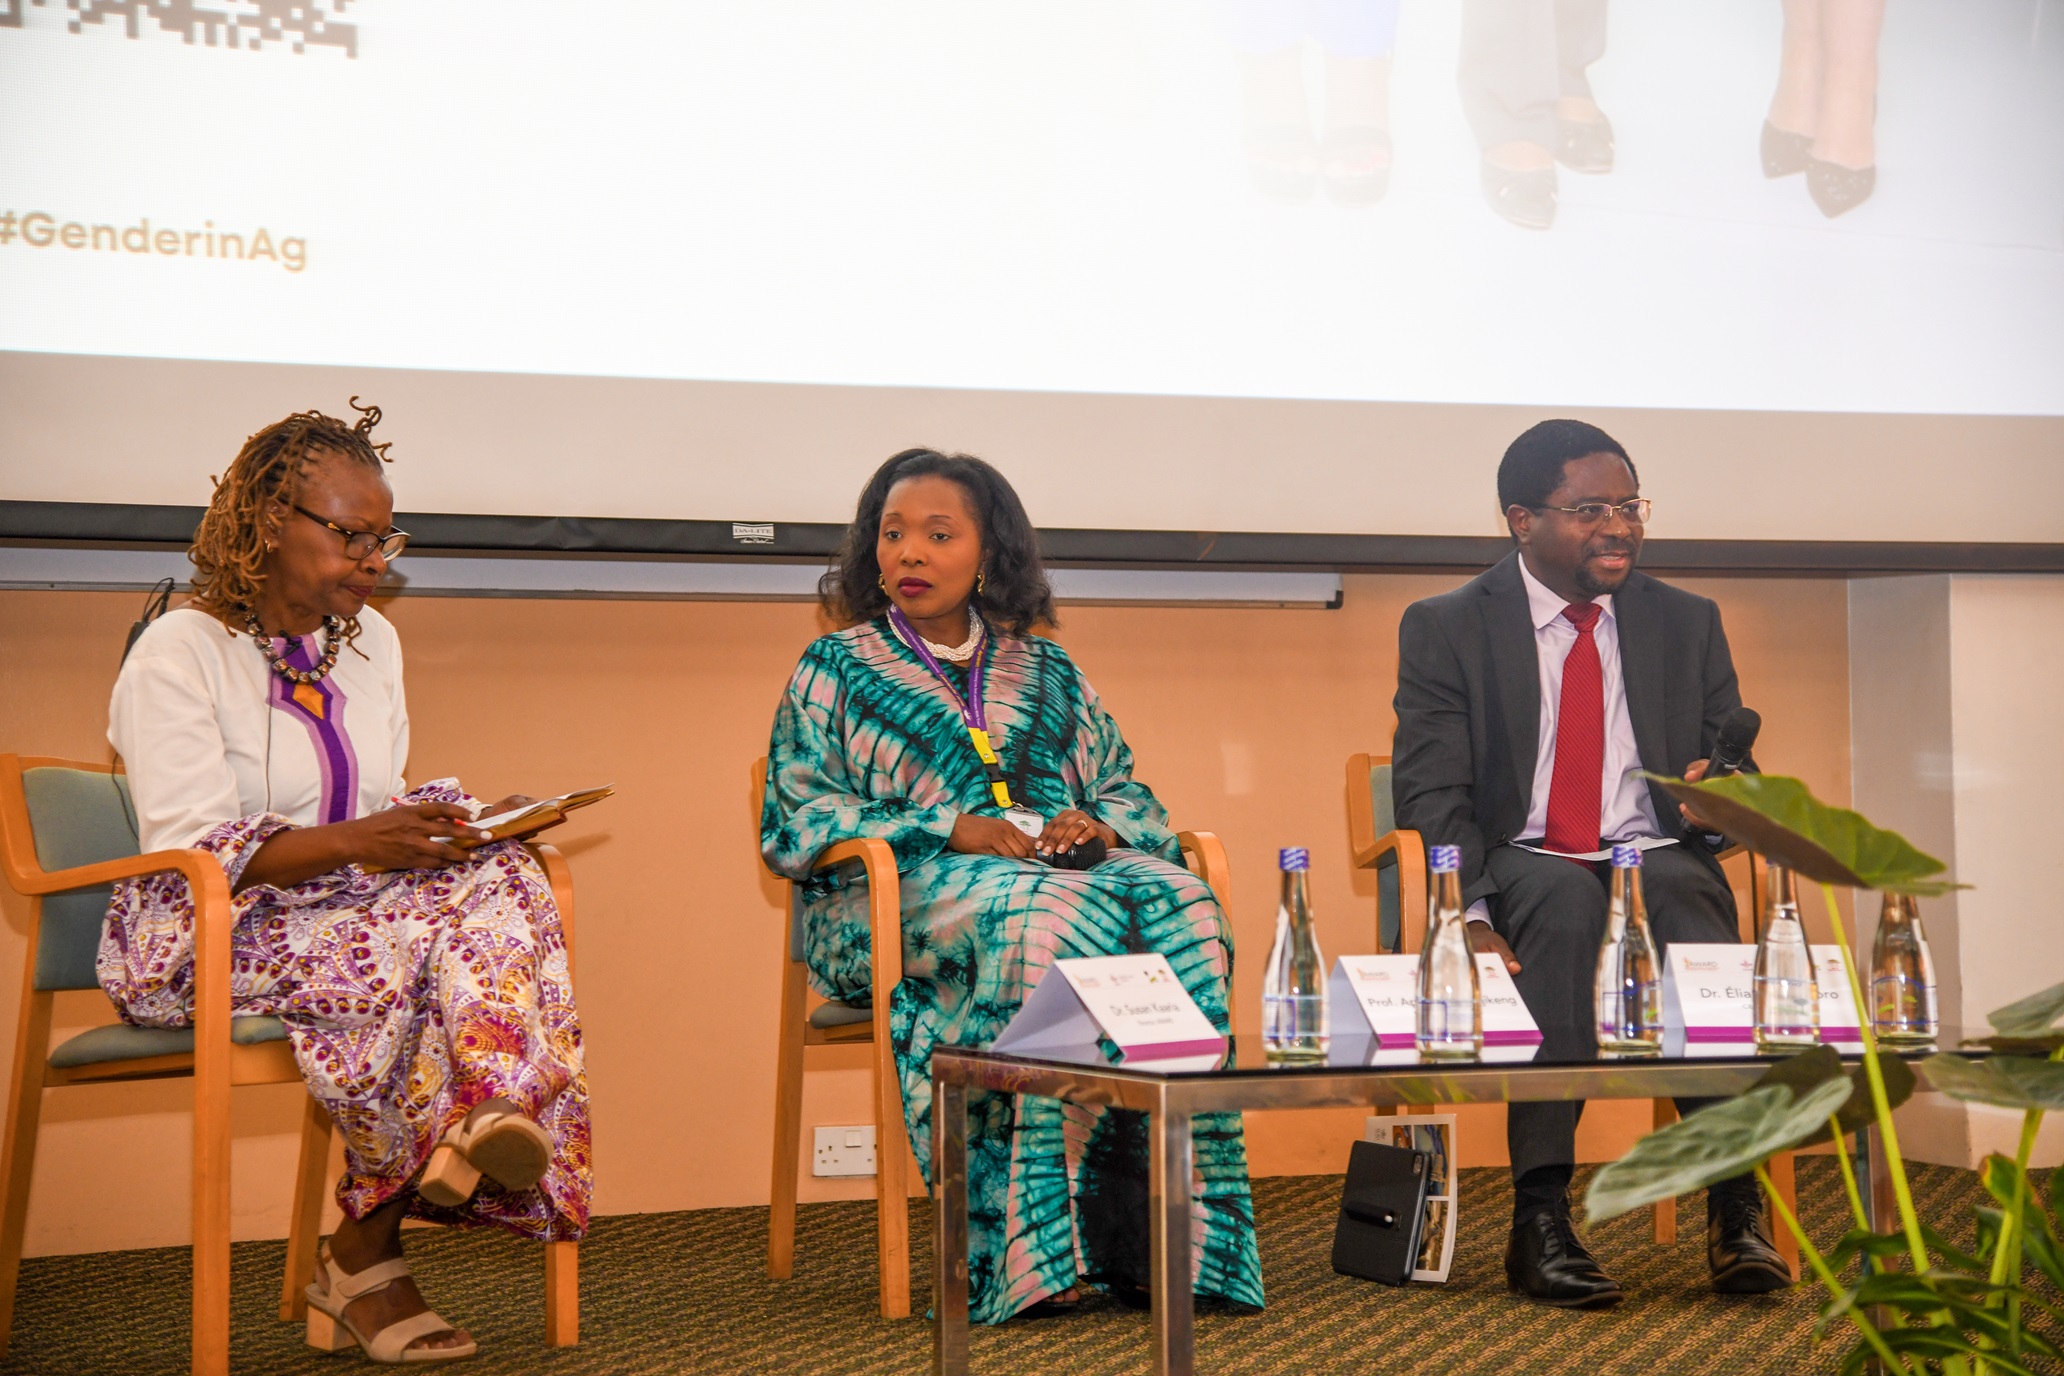 Susan Kaaria, Appolinaire Djikeng and Eliane Ubalijoro discuss experiences